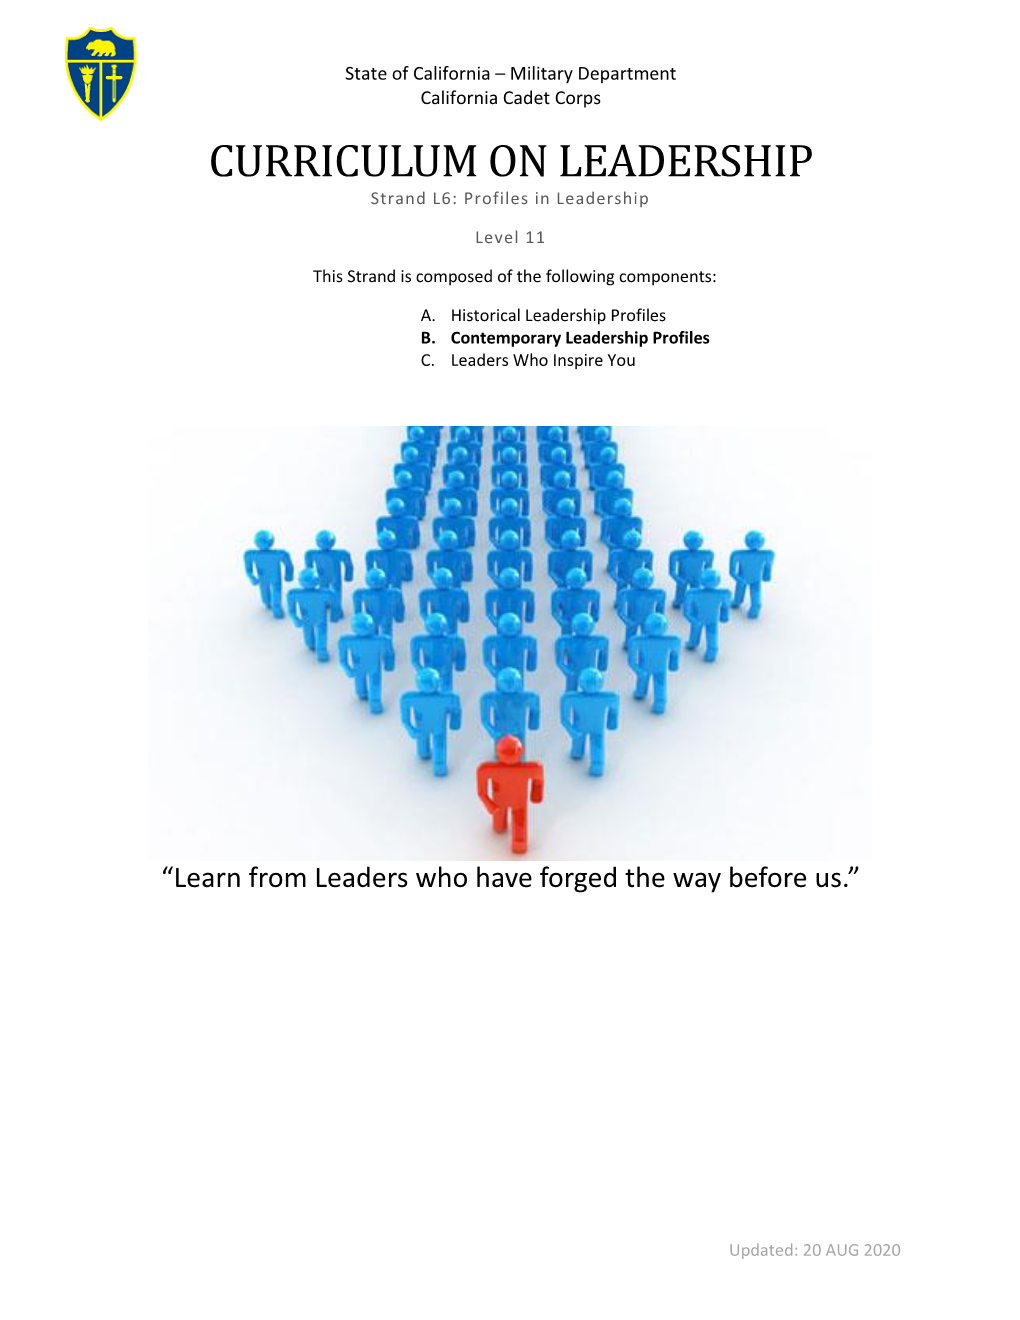 CURRICULUM on LEADERSHIP Strand L6: Profiles in Leadership